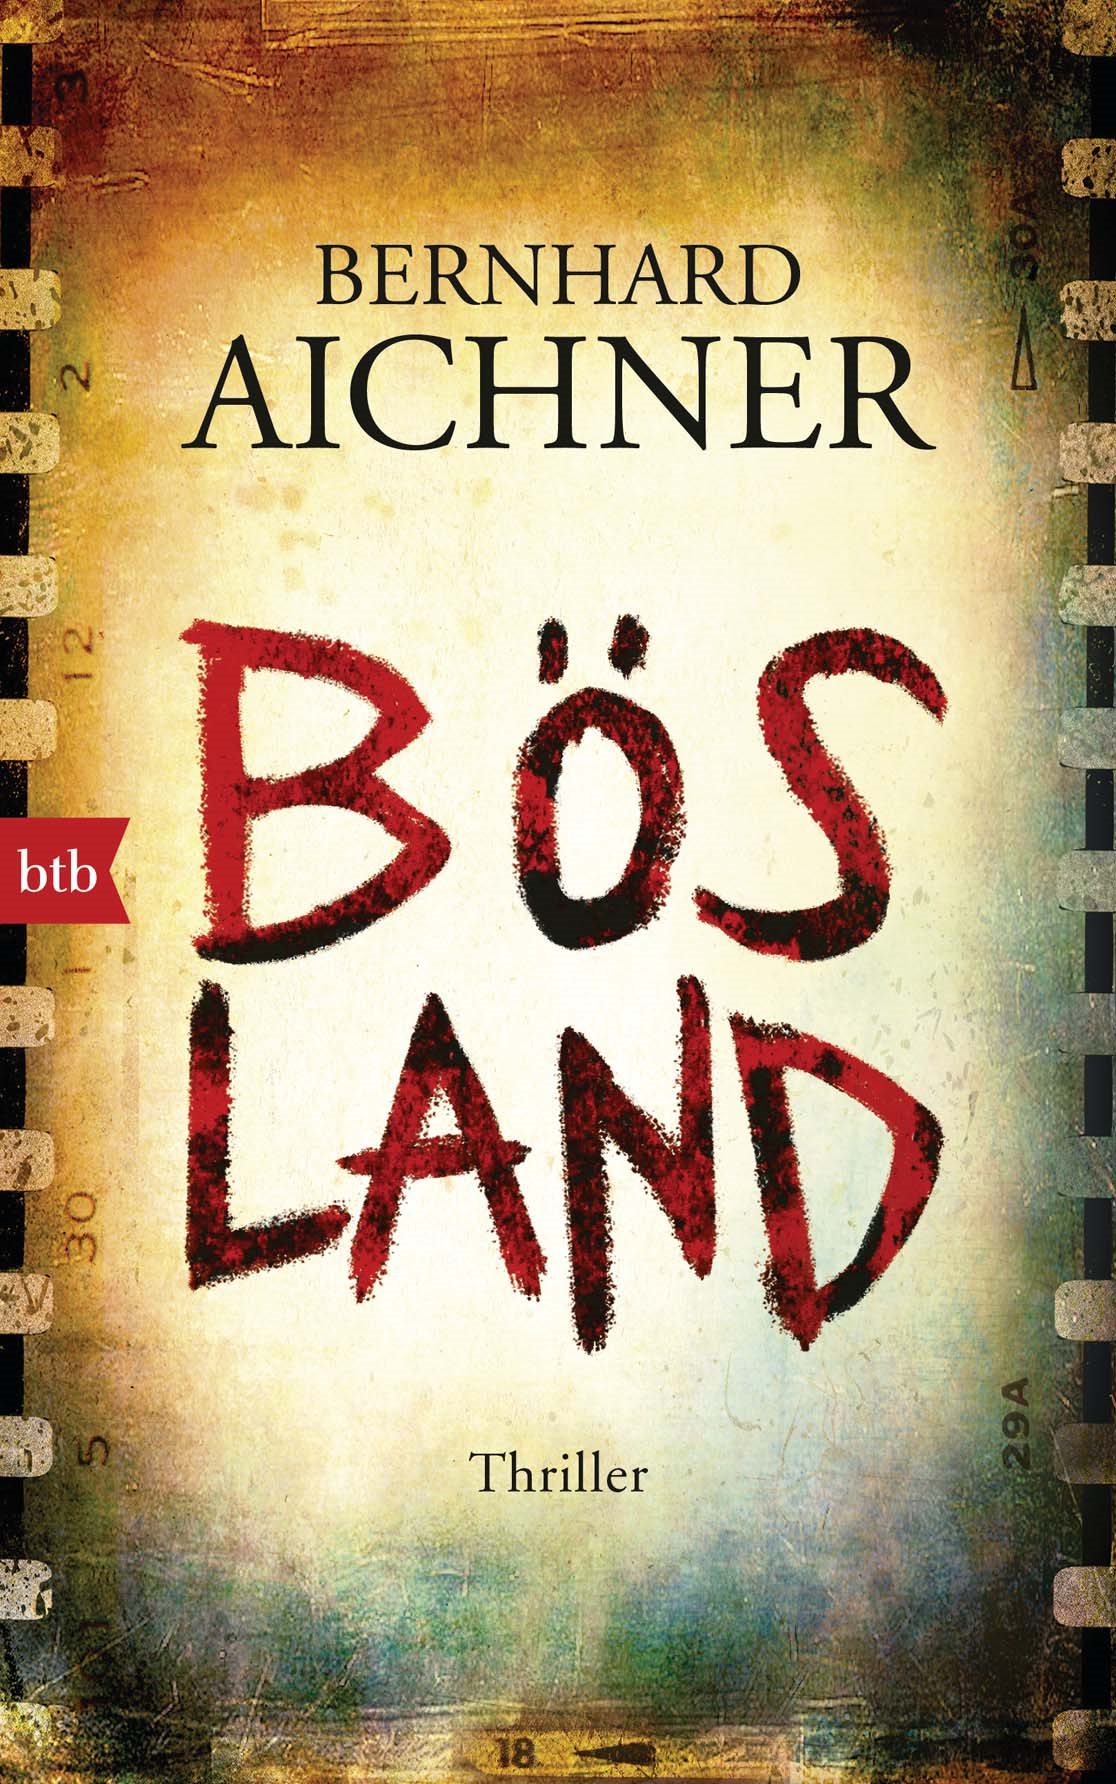 LIBRO_Aichner B - Bösland_€20,60